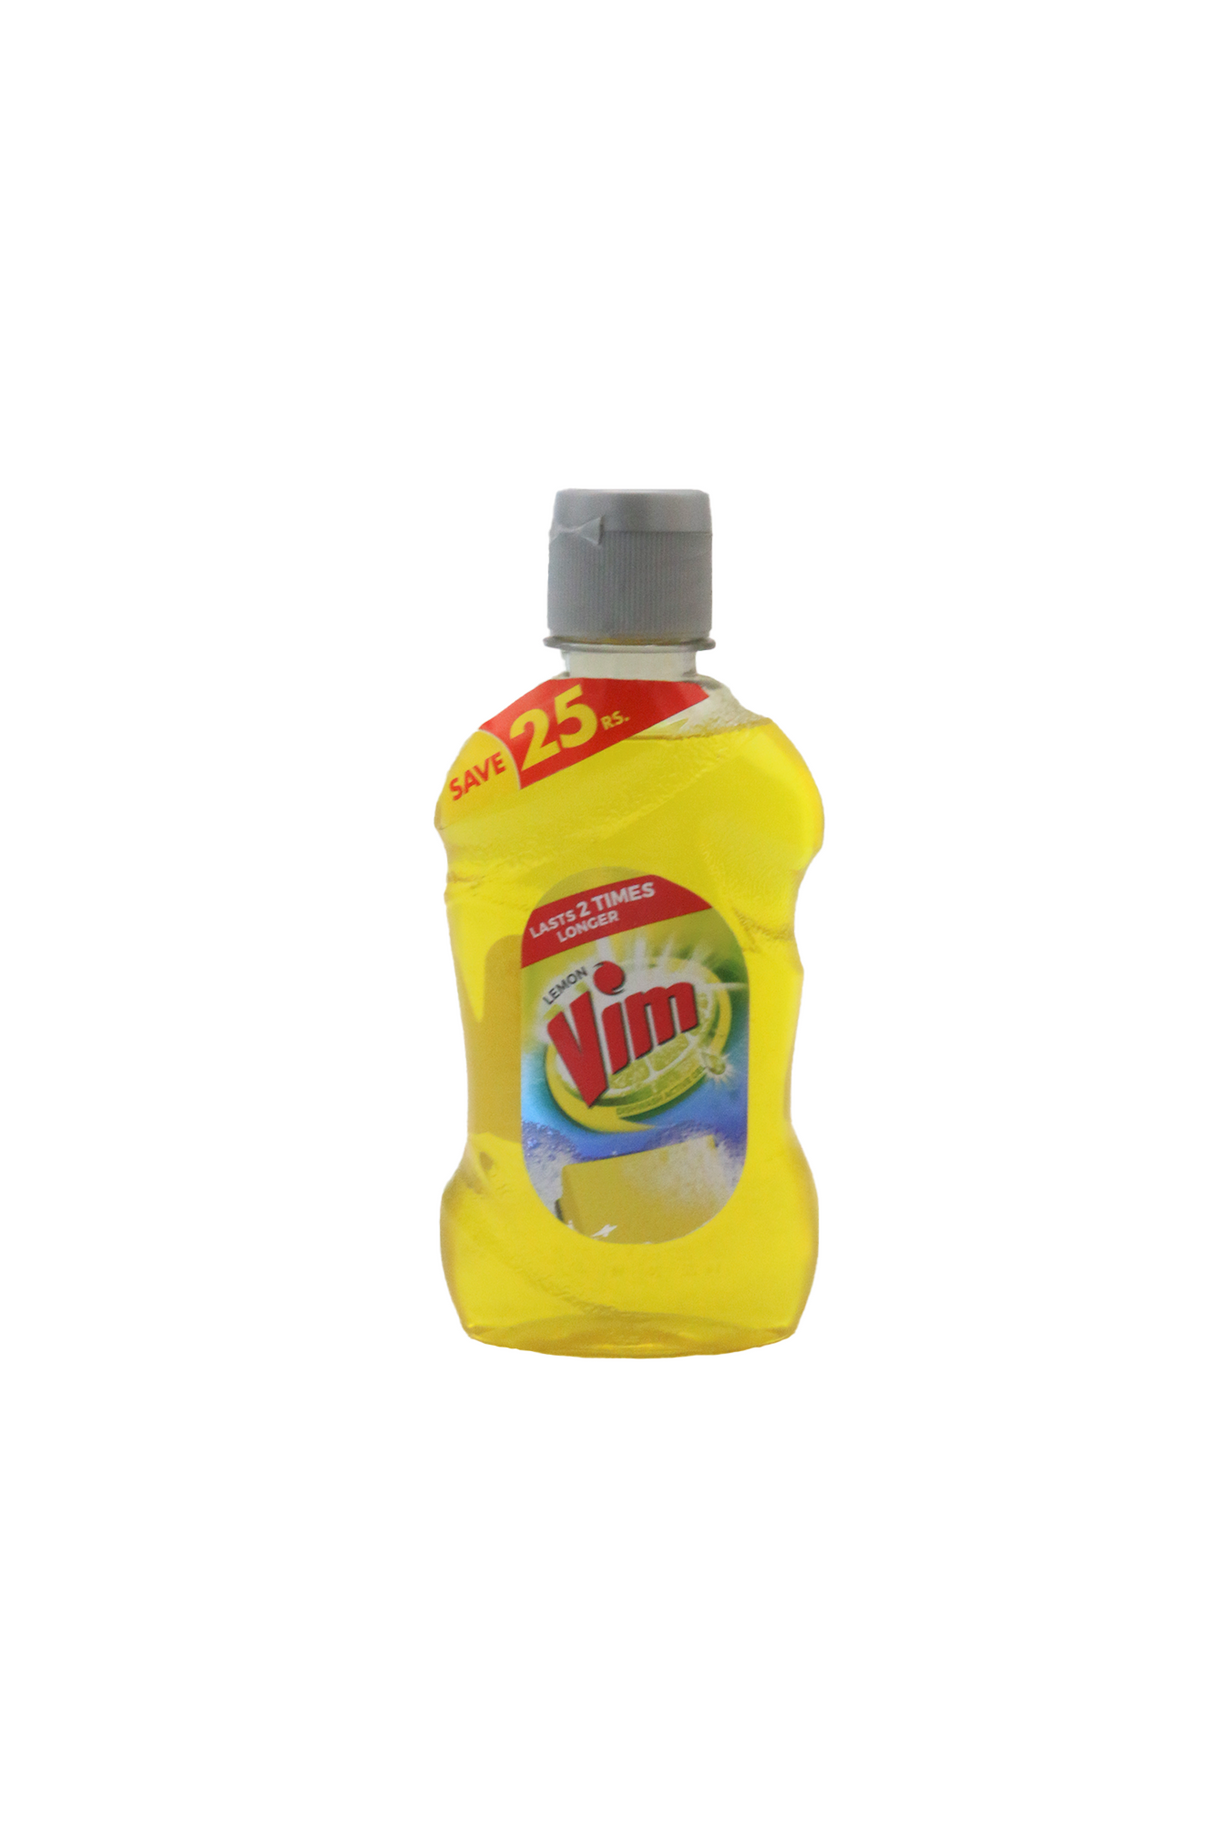 vim dishwash gel lemon 250ml yellow